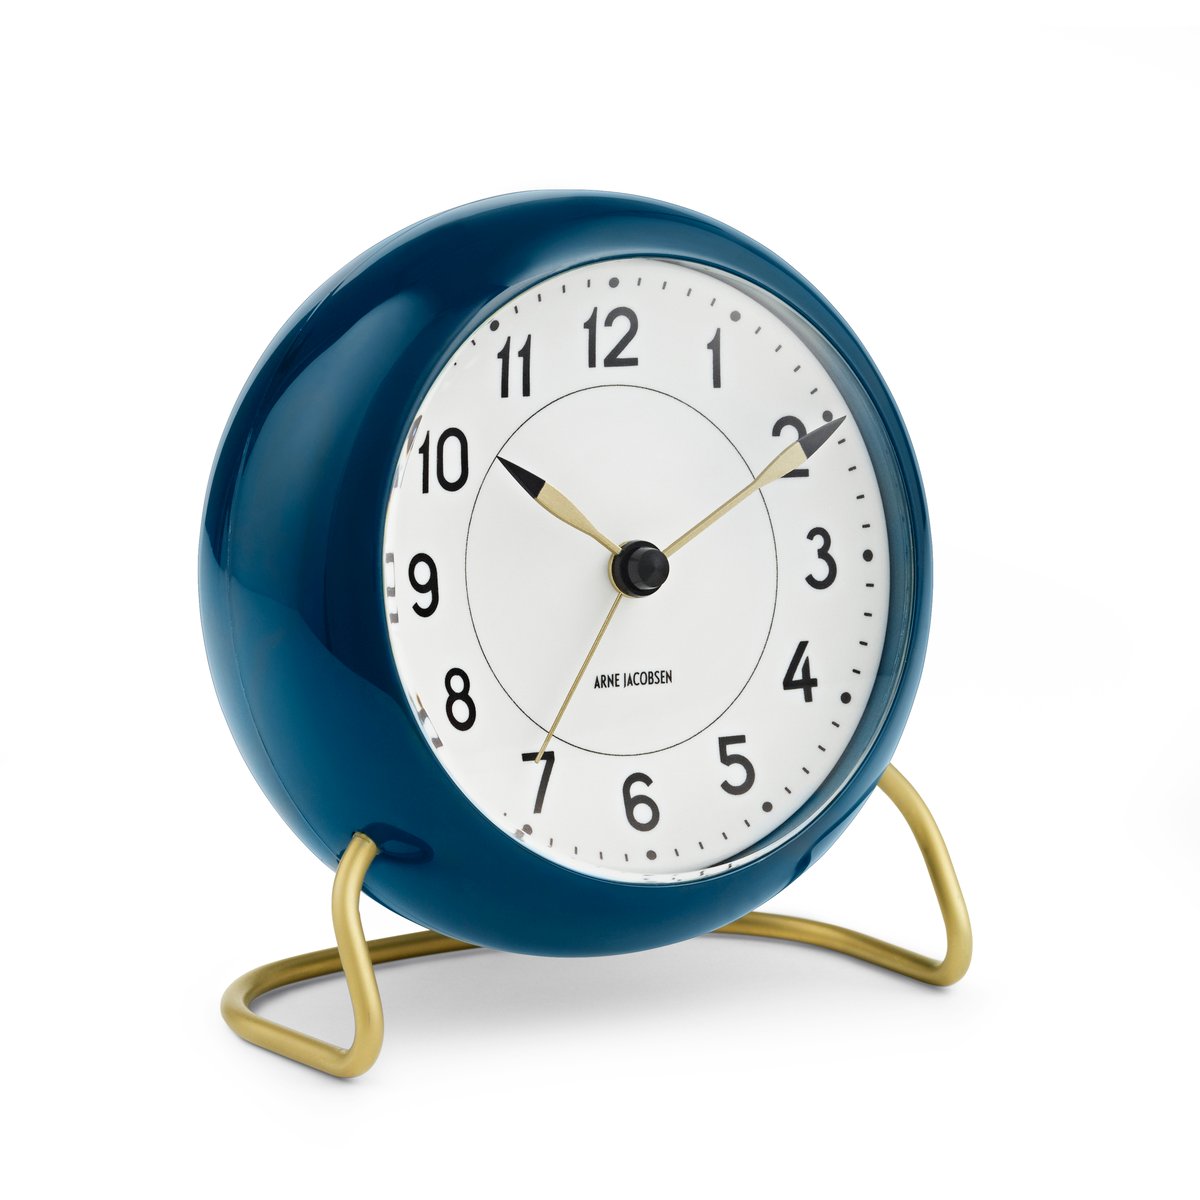 Arne Jacobsen Clocks AJ Station bordur petrolblå petrolblå